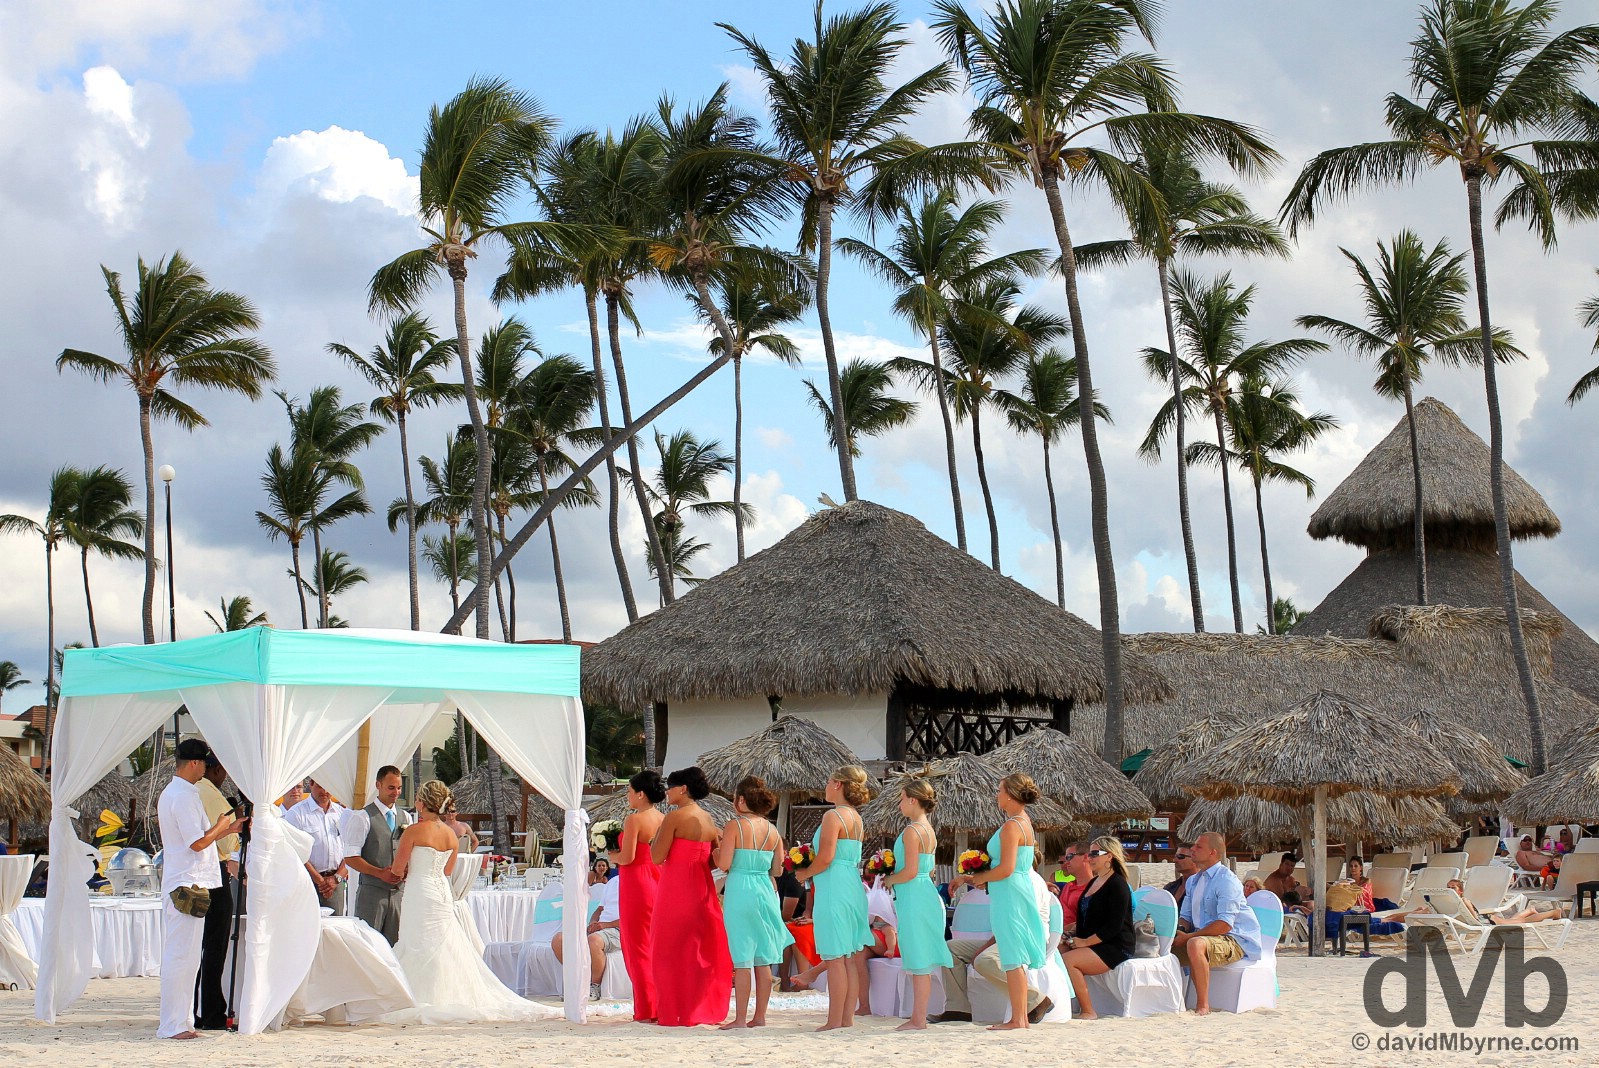 A wedding on Bavaro Beach, Punta Cana, Dominican Republic. May 27, 2015.